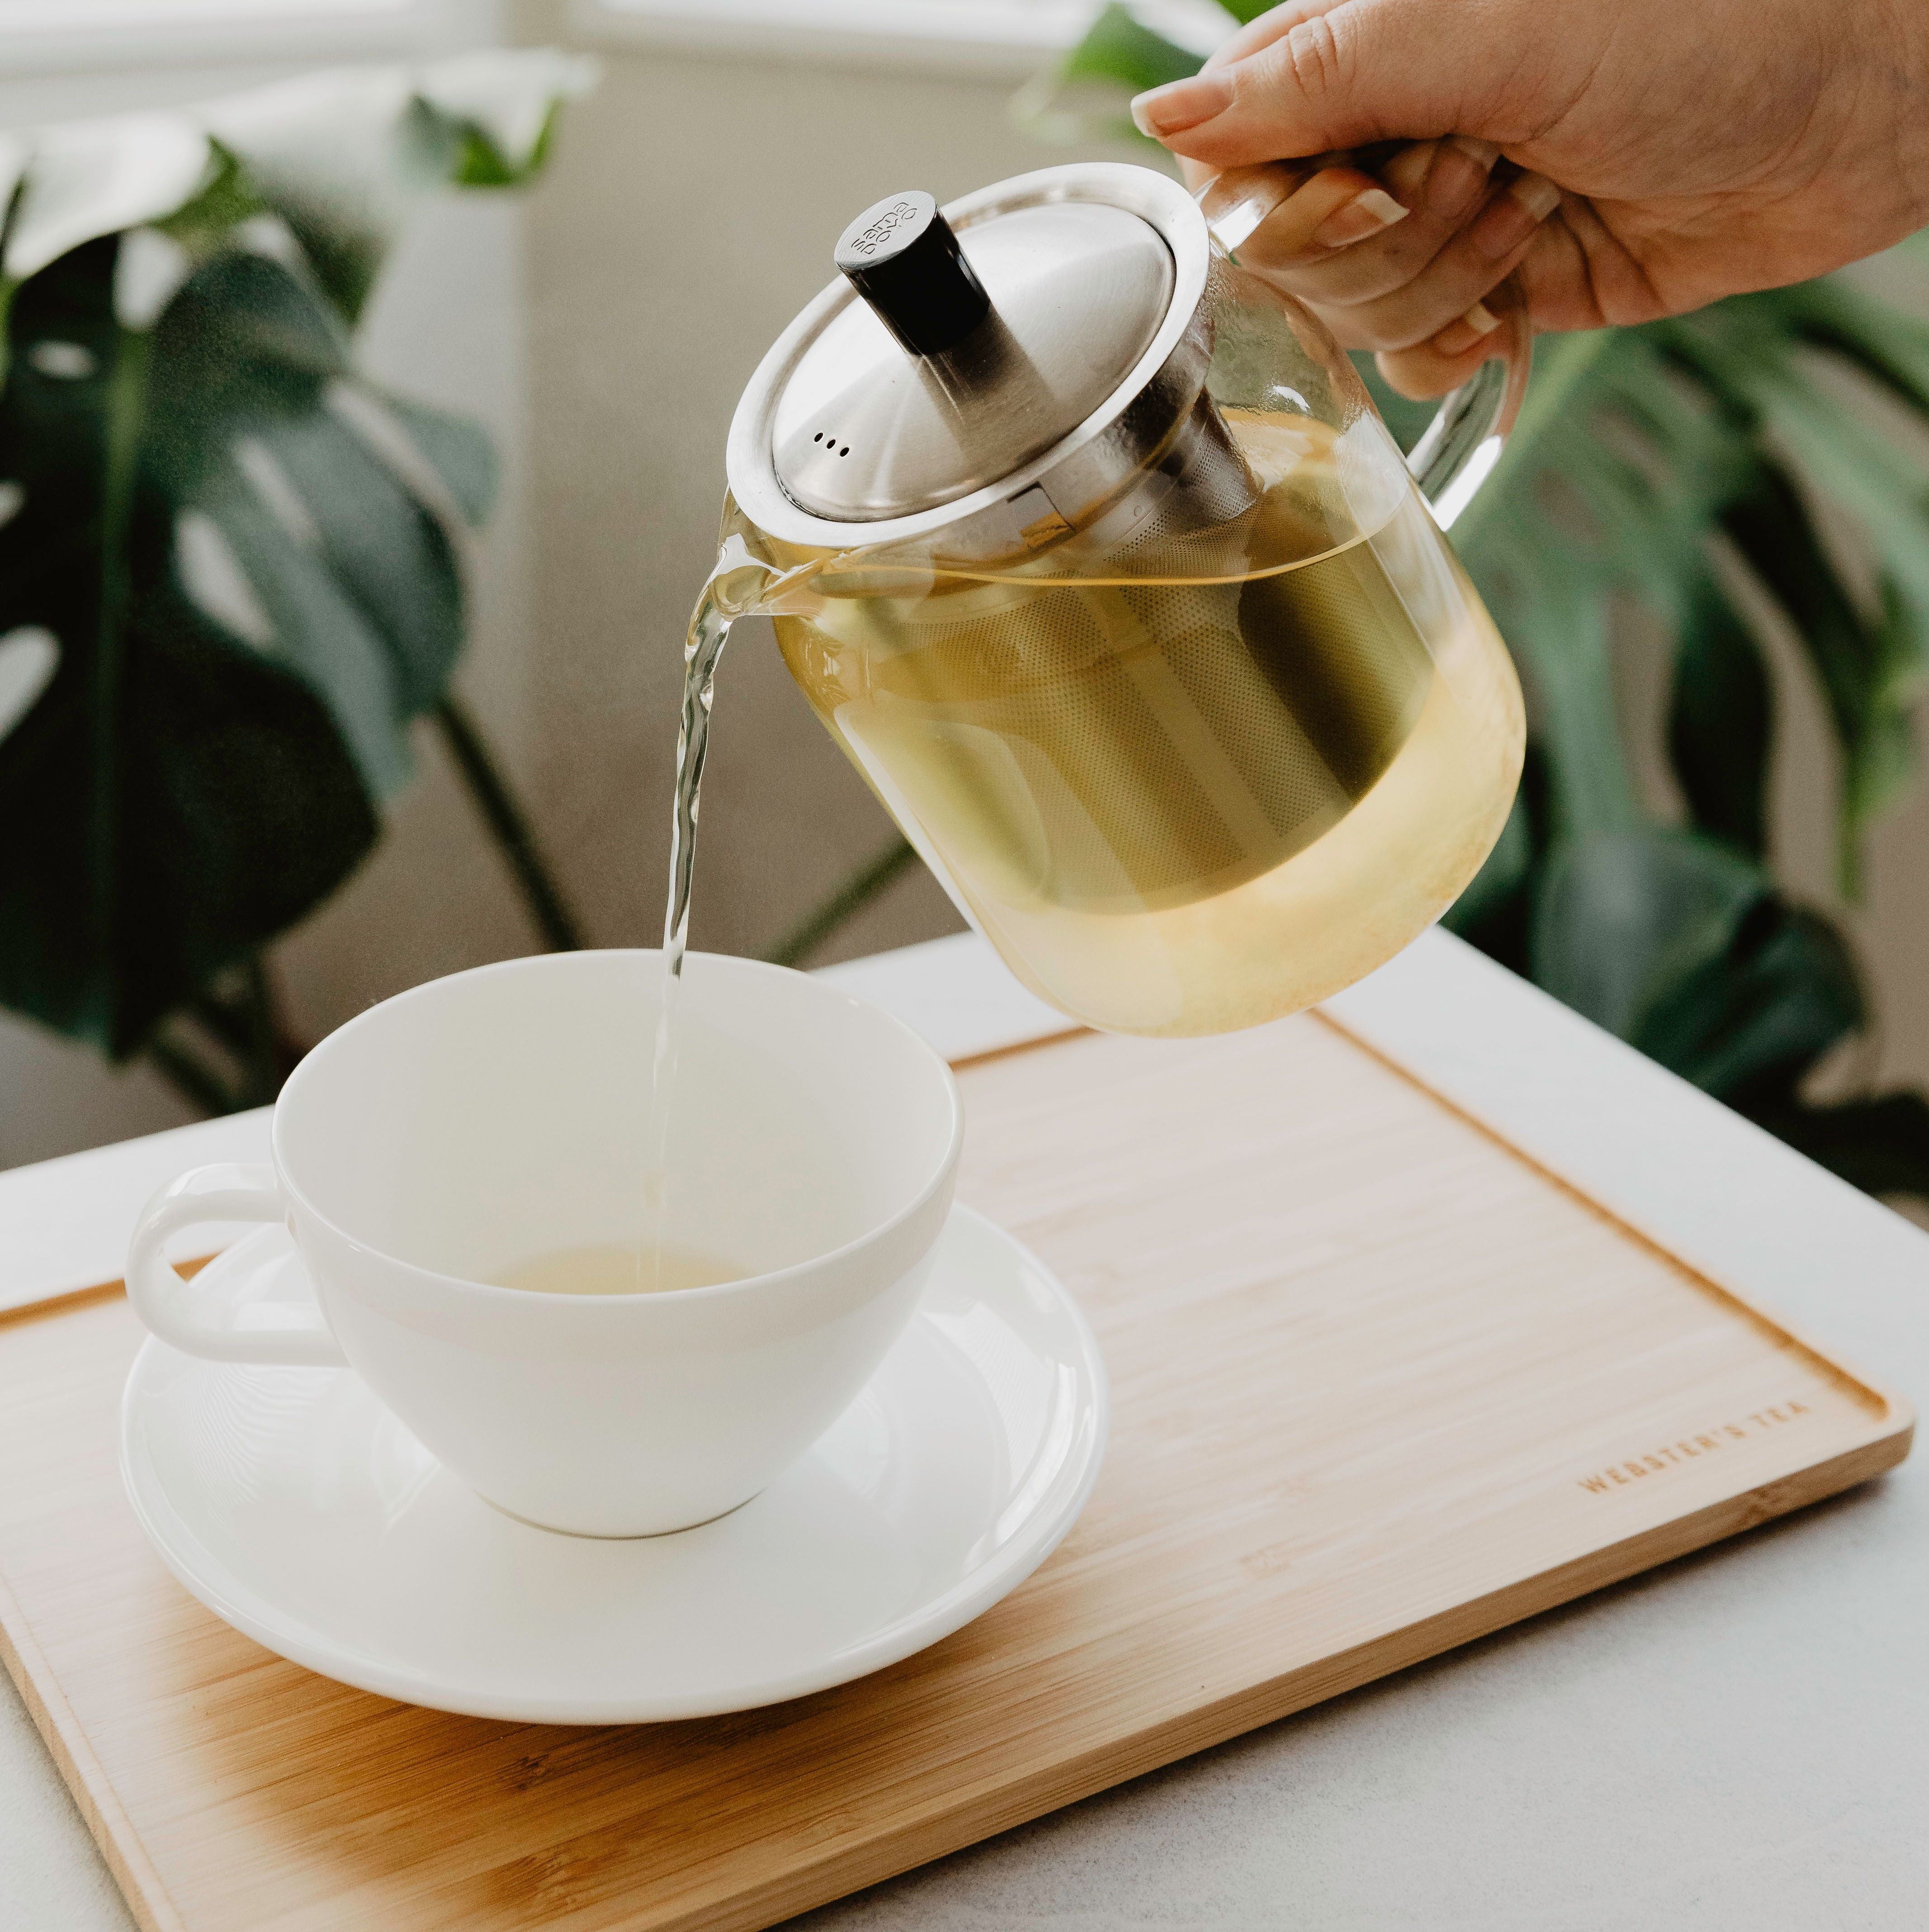 Pouring tea into a mug on a tea tray.